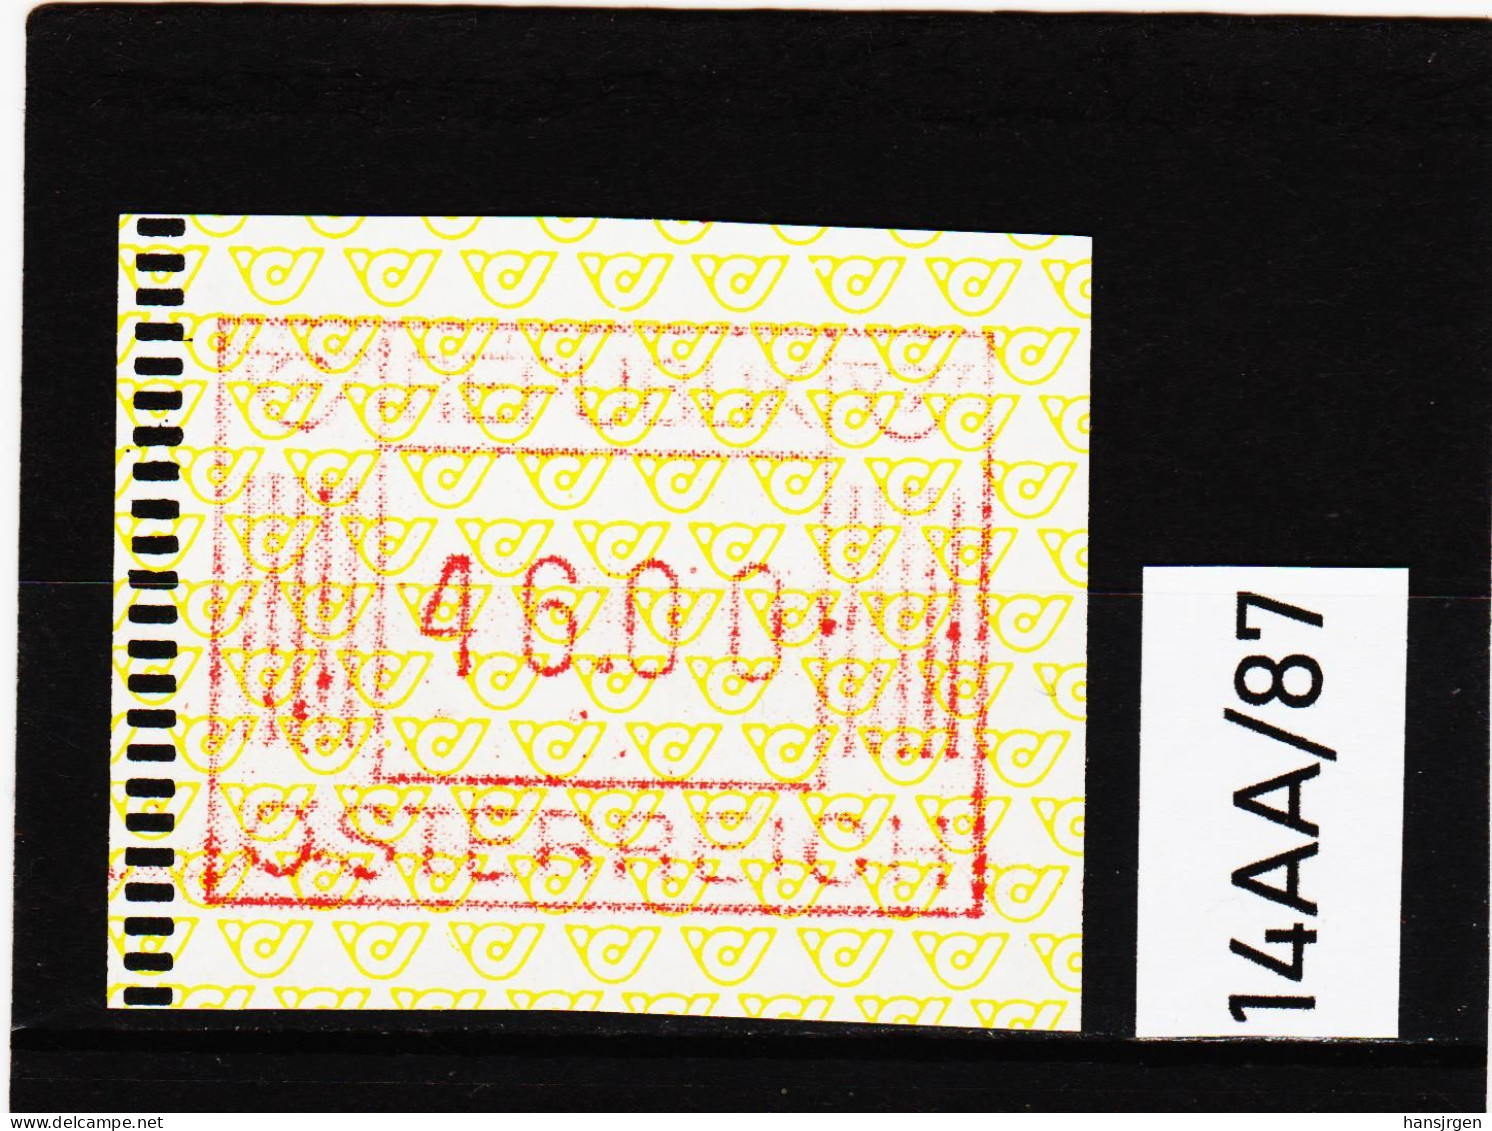 14AA/87  ÖSTERREICH 1983 AUTOMATENMARKEN 1. AUSGABE  46,00 SCHILLING   ** Postfrisch - Timbres De Distributeurs [ATM]